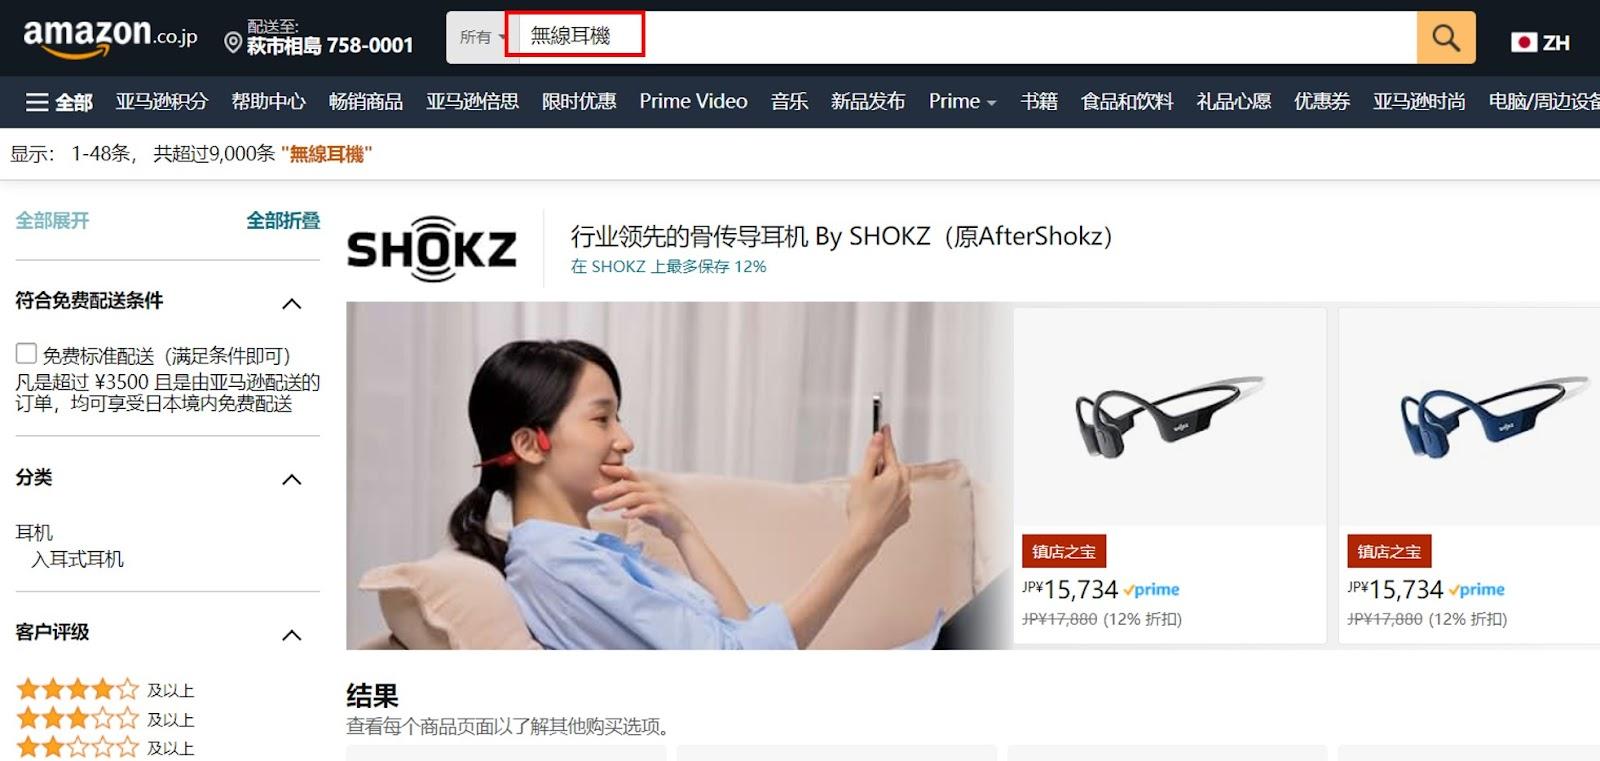 Amazon日本支援繁體中文搜尋